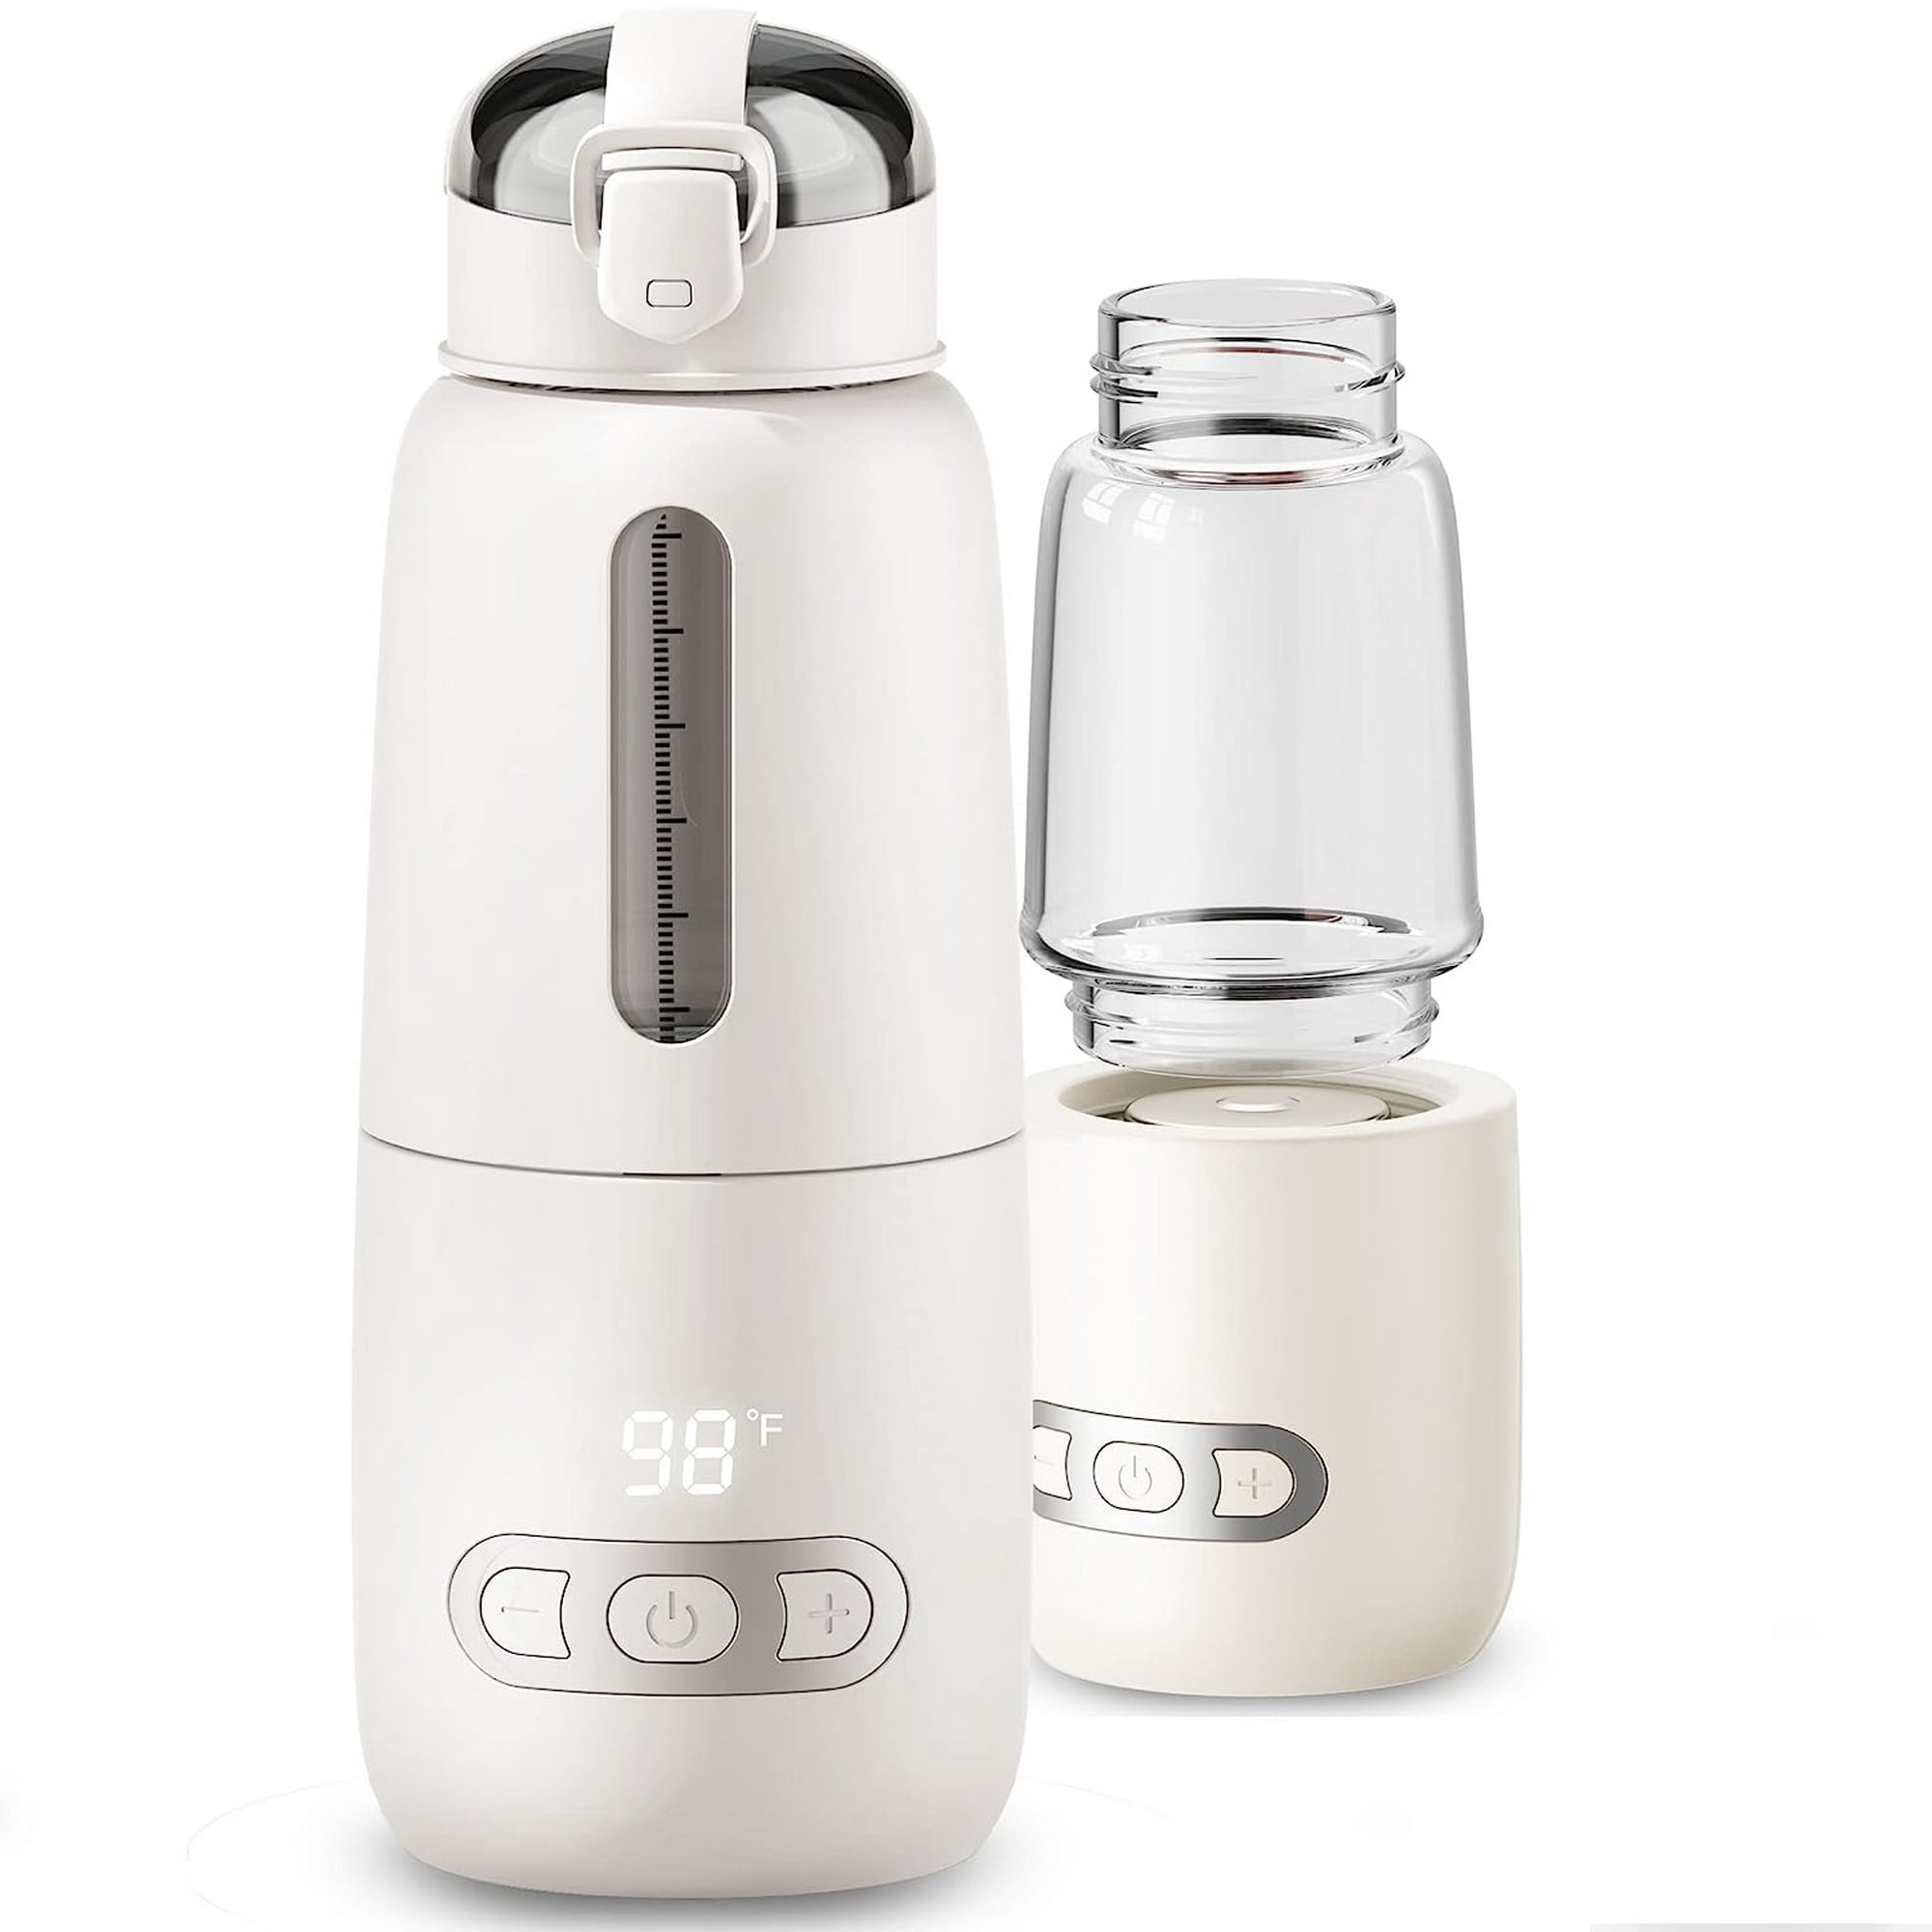 Calentador de biberones 10 en 1 doble calentador de biberones para leche  materna y fórmula calentador de leche rápido con temporizador, control